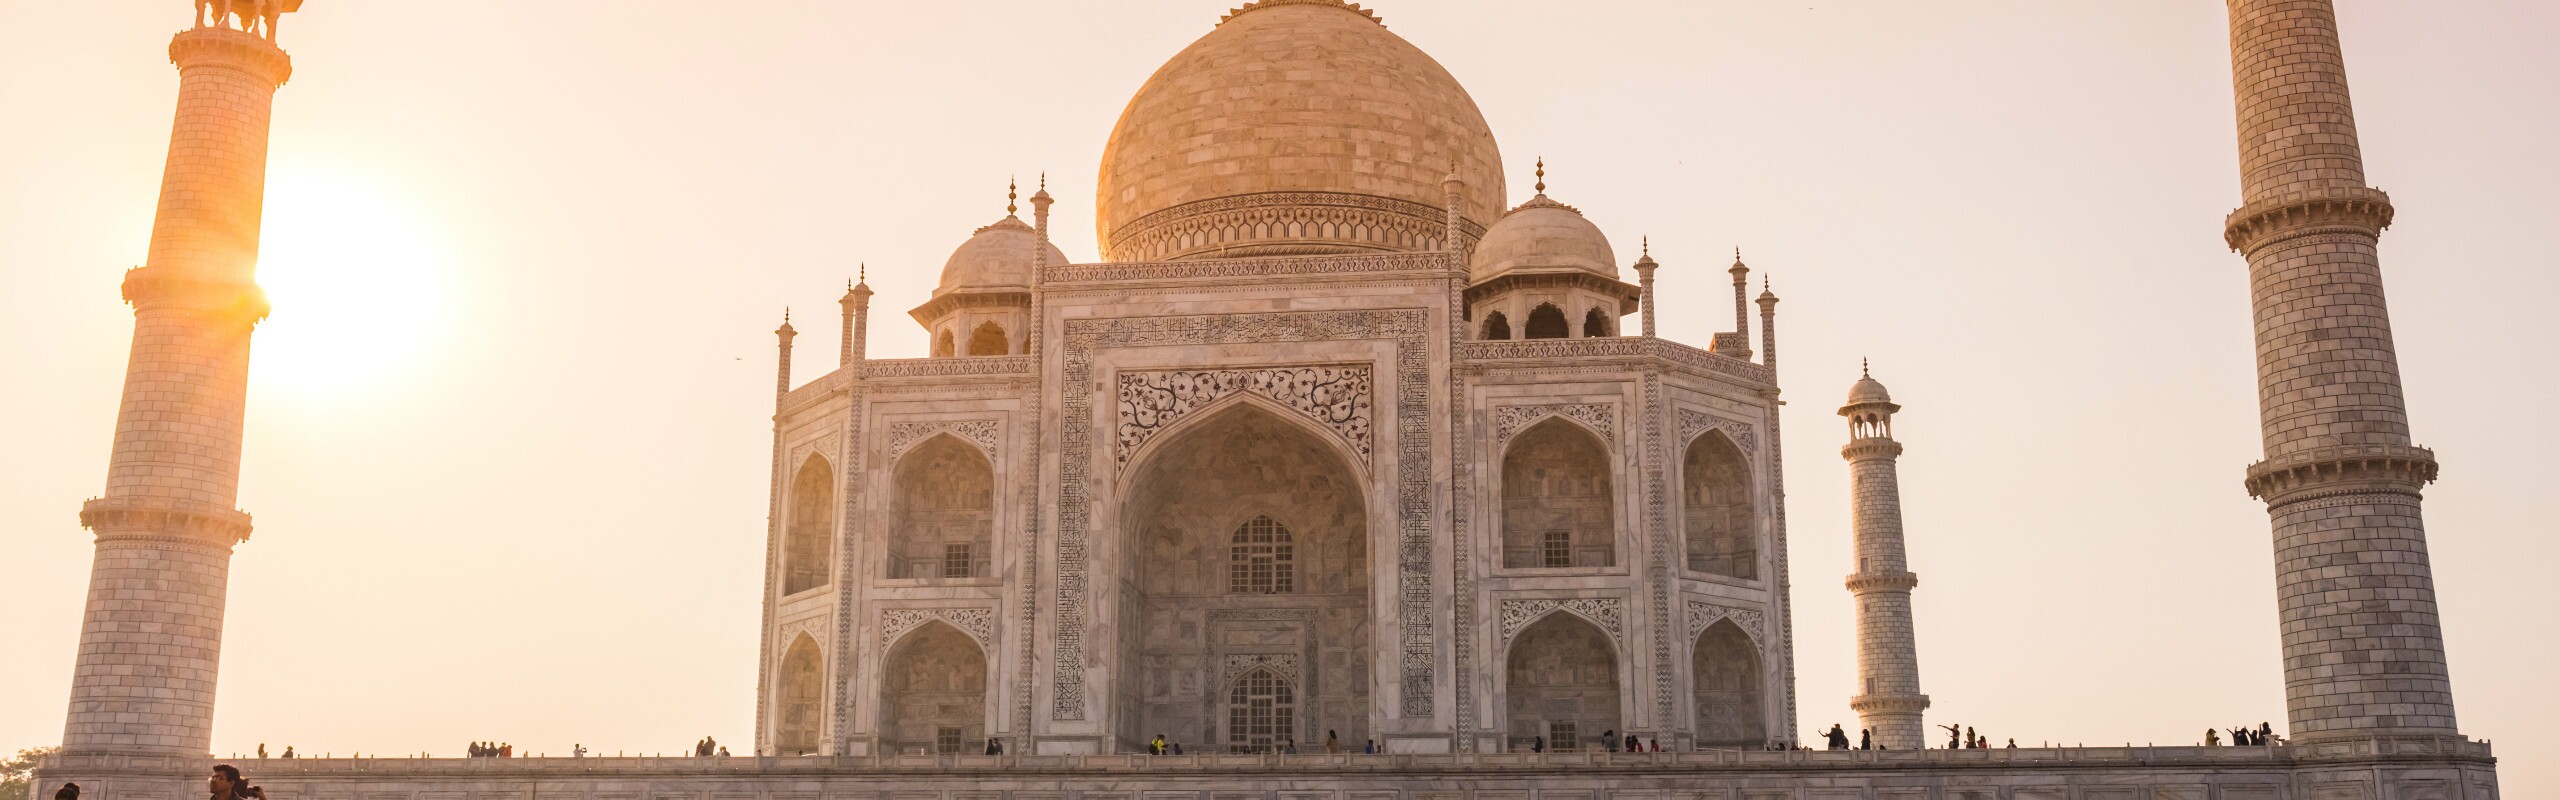 Essential Guide to Visiting the Taj Mahal 